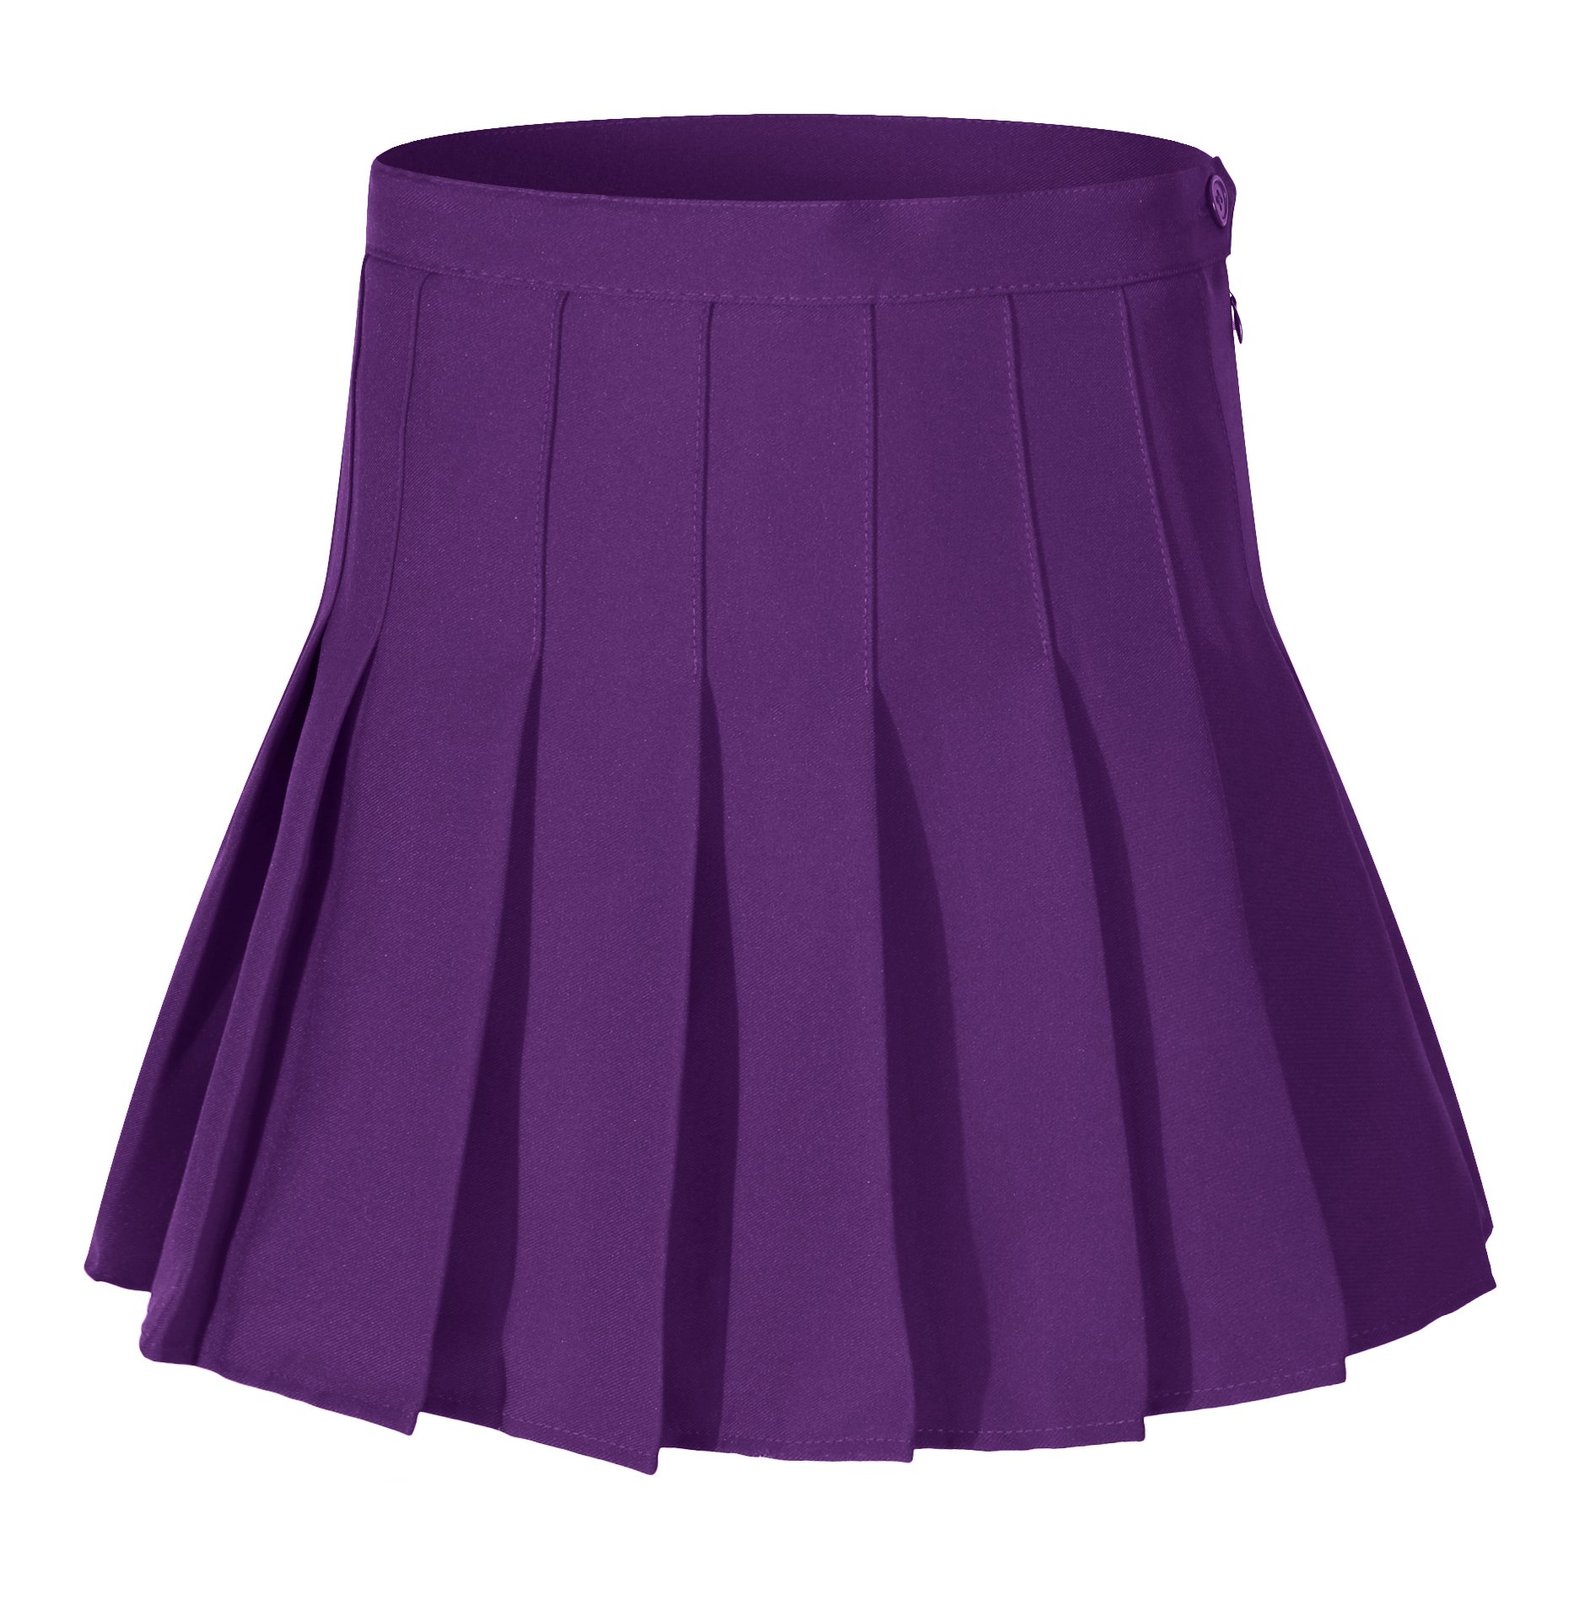 Beautifulfashionlife - Women'solid pleated plus size sport tennis skirts (4xl,dark purple)